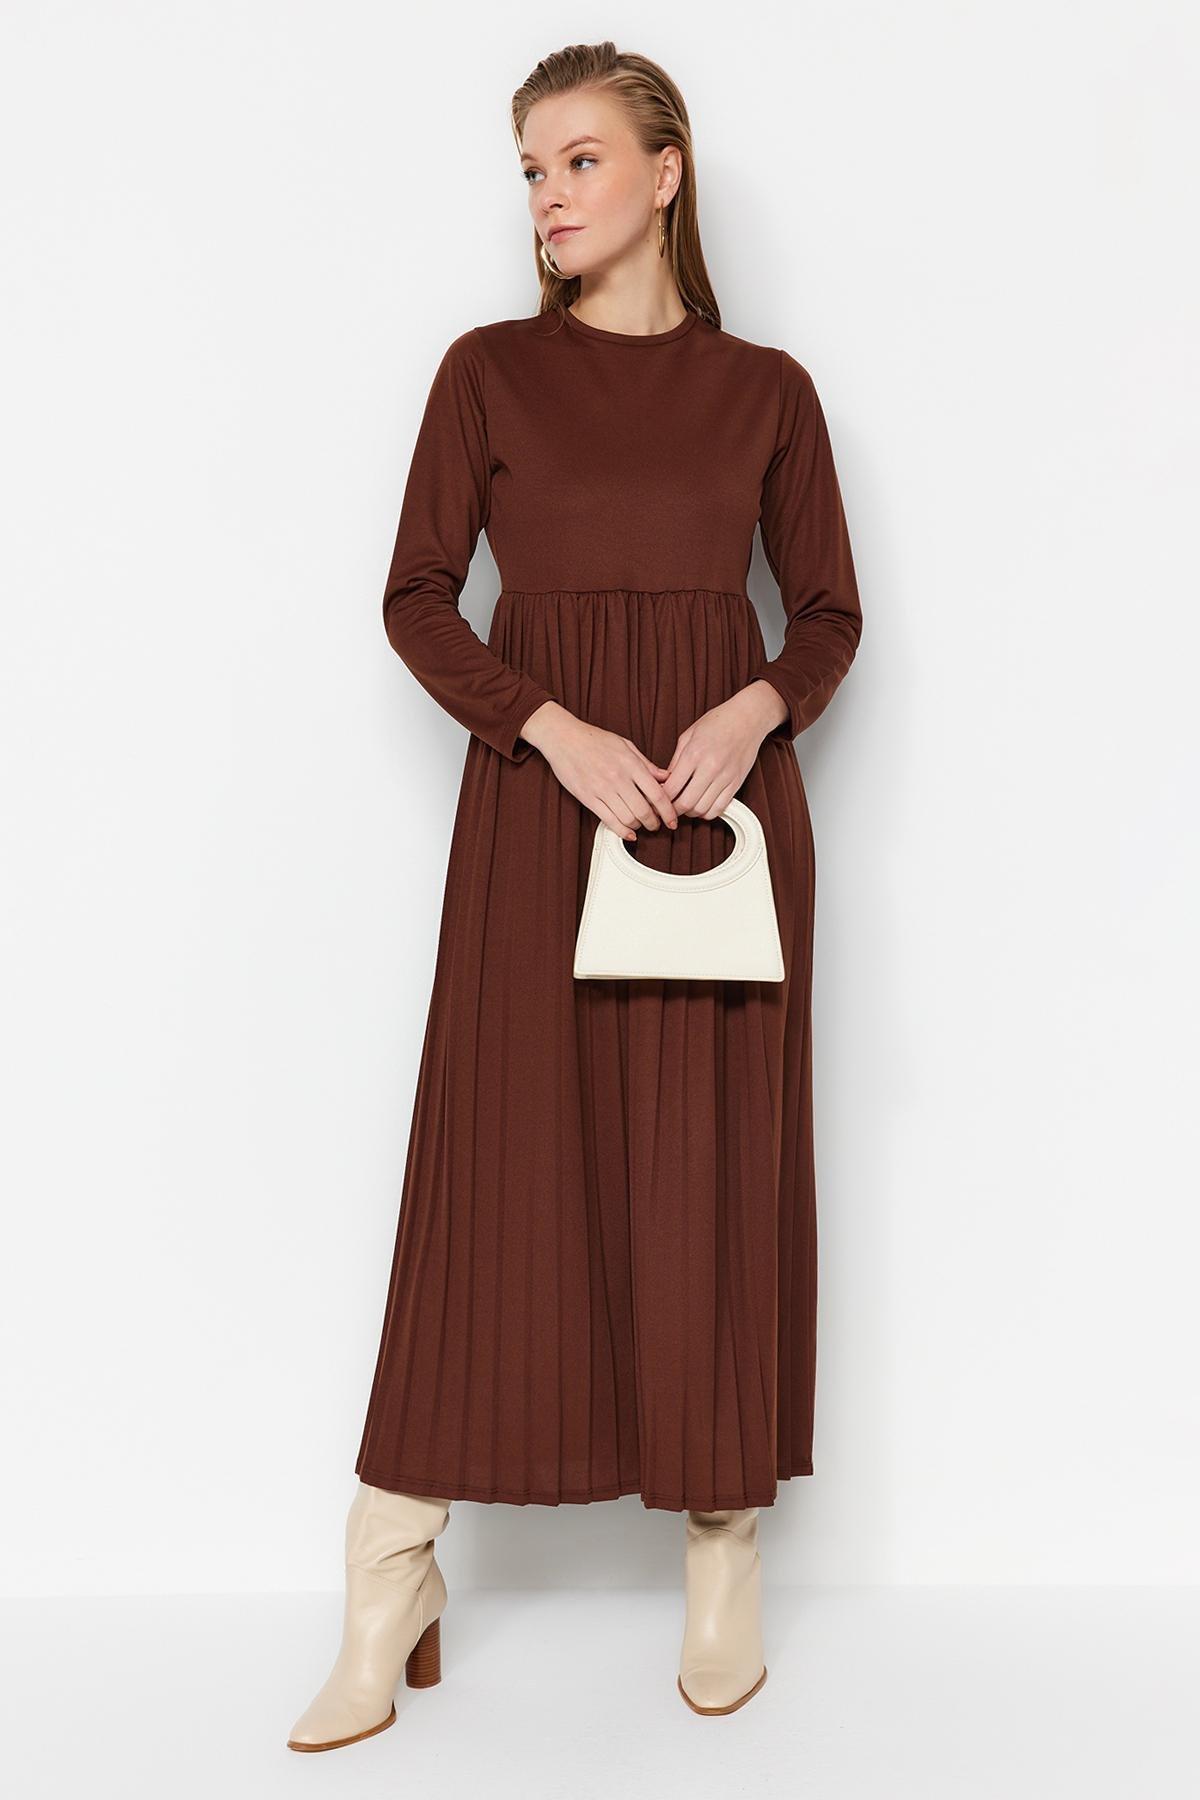 Trendyol - Brown Pleated Scuba Knitted Dress